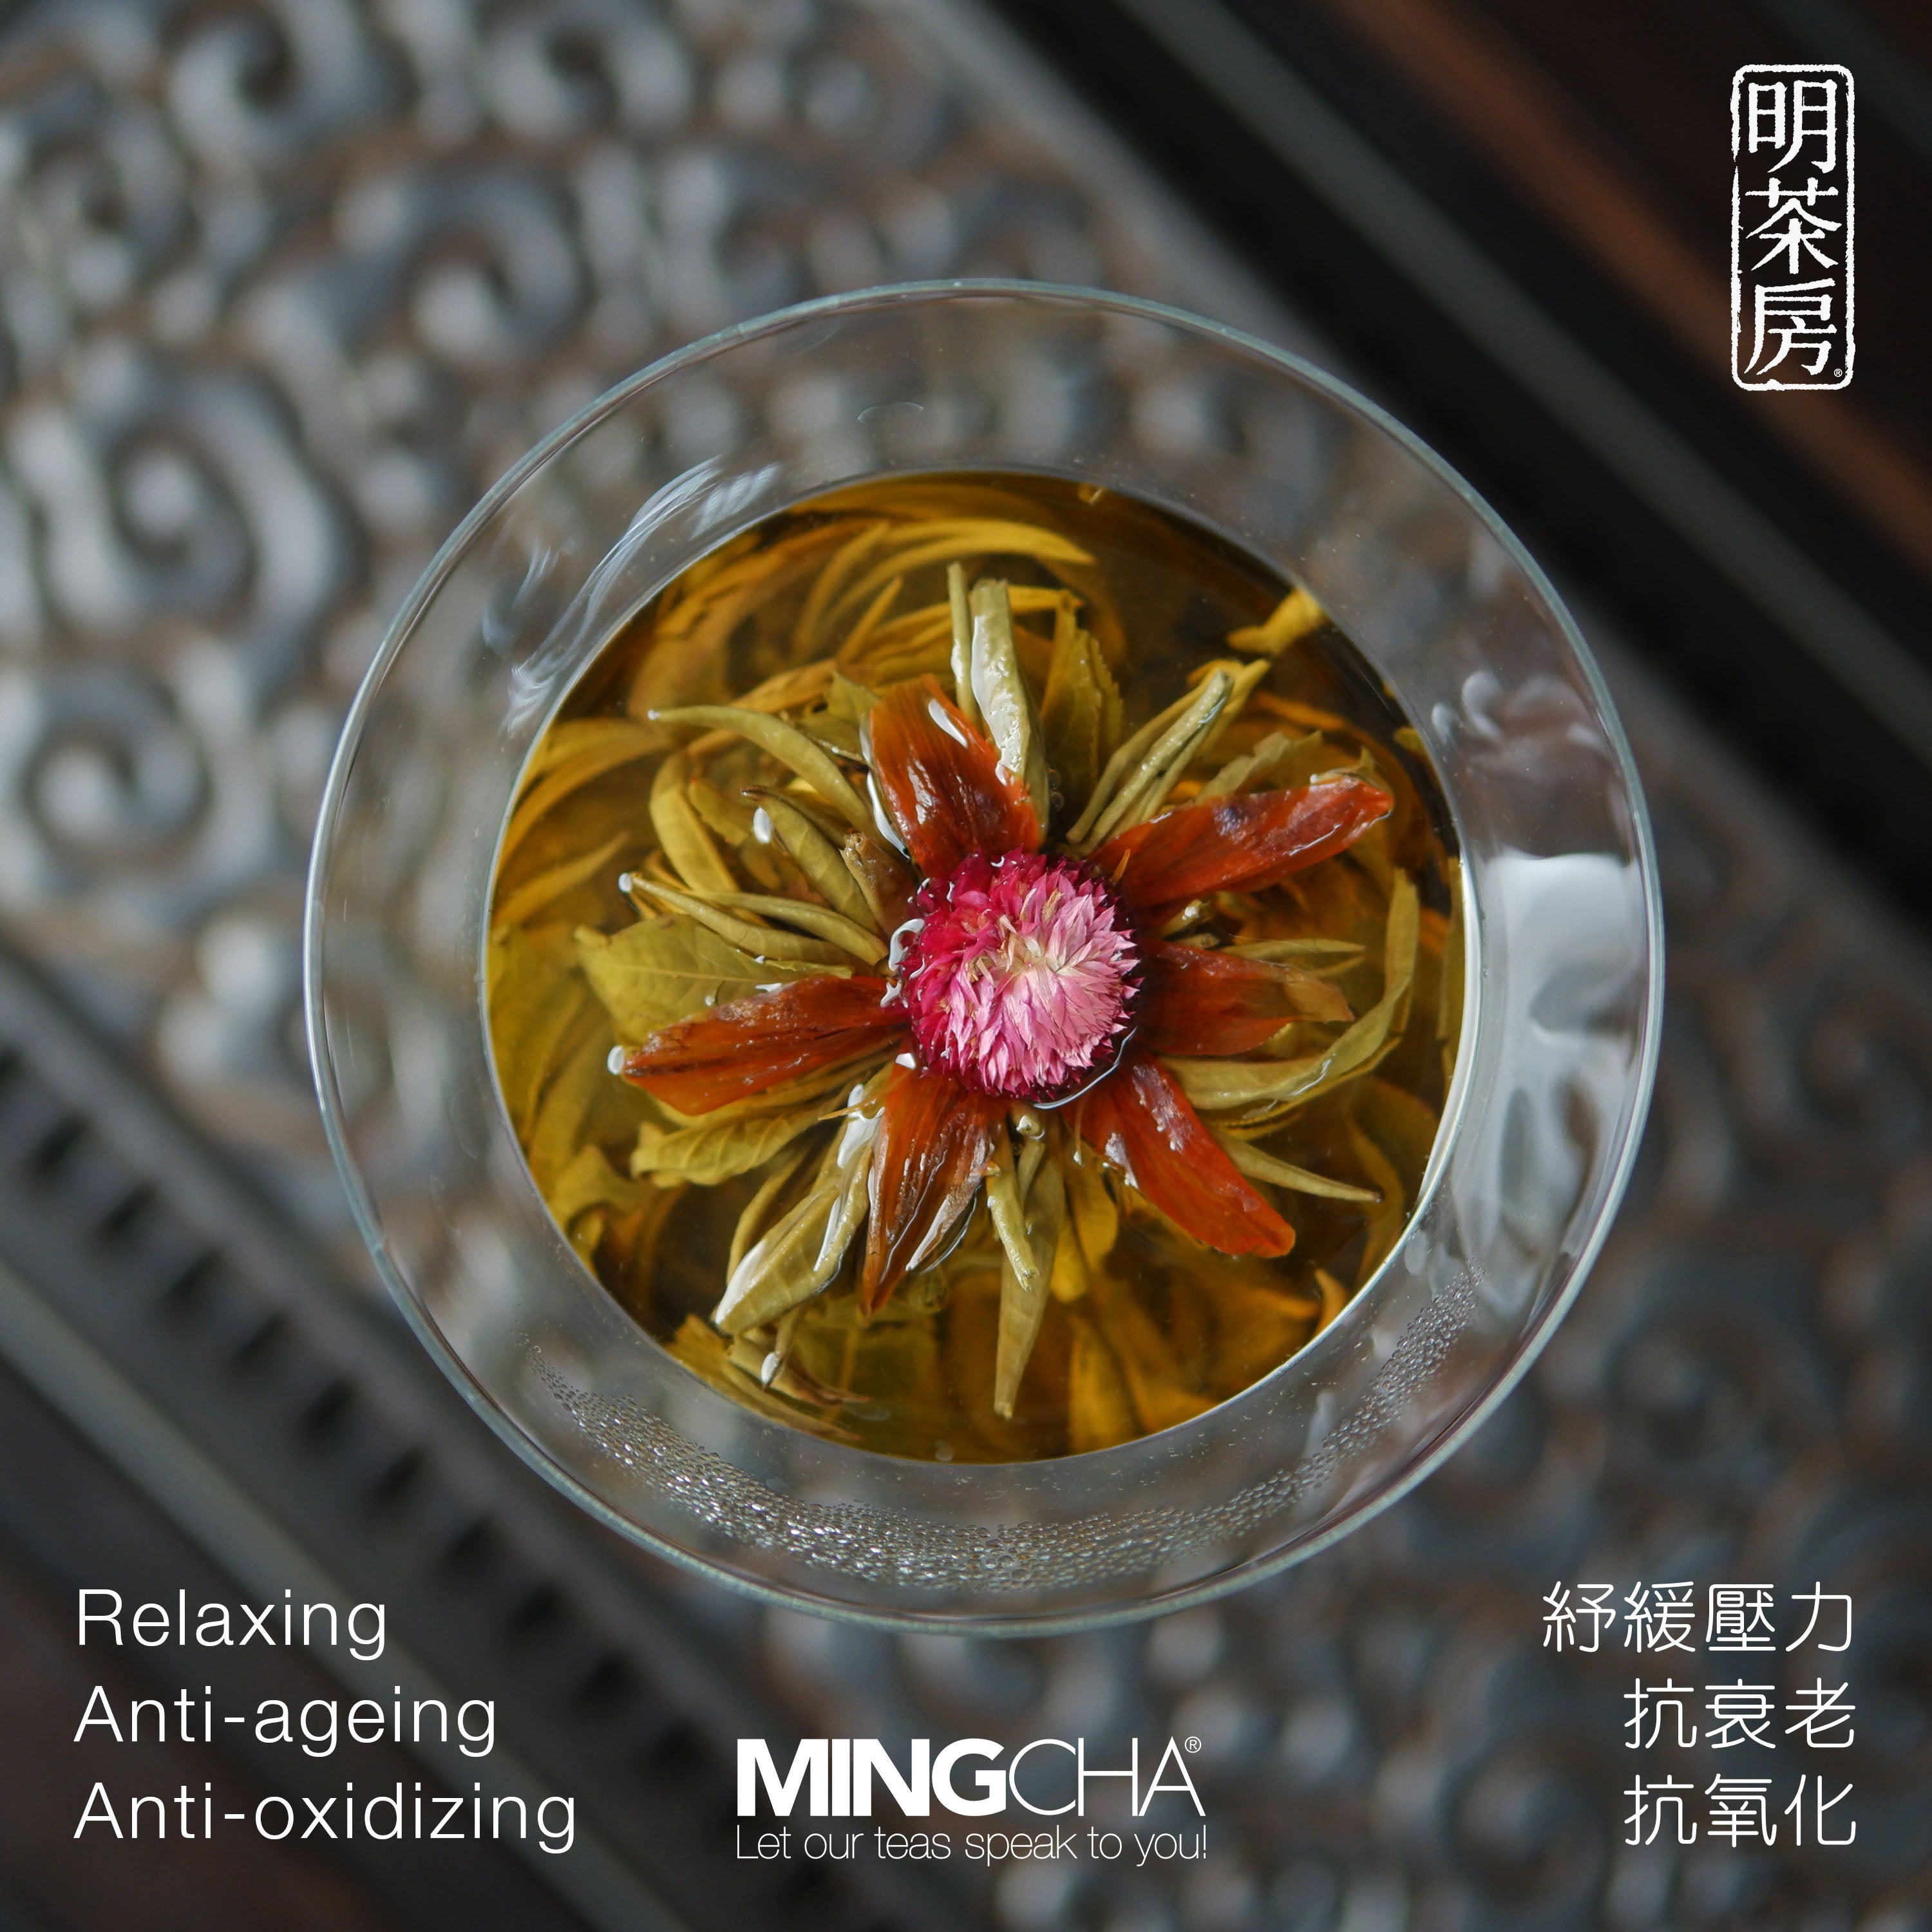 MingCha Jasmine Blossoms Scented Green Tea